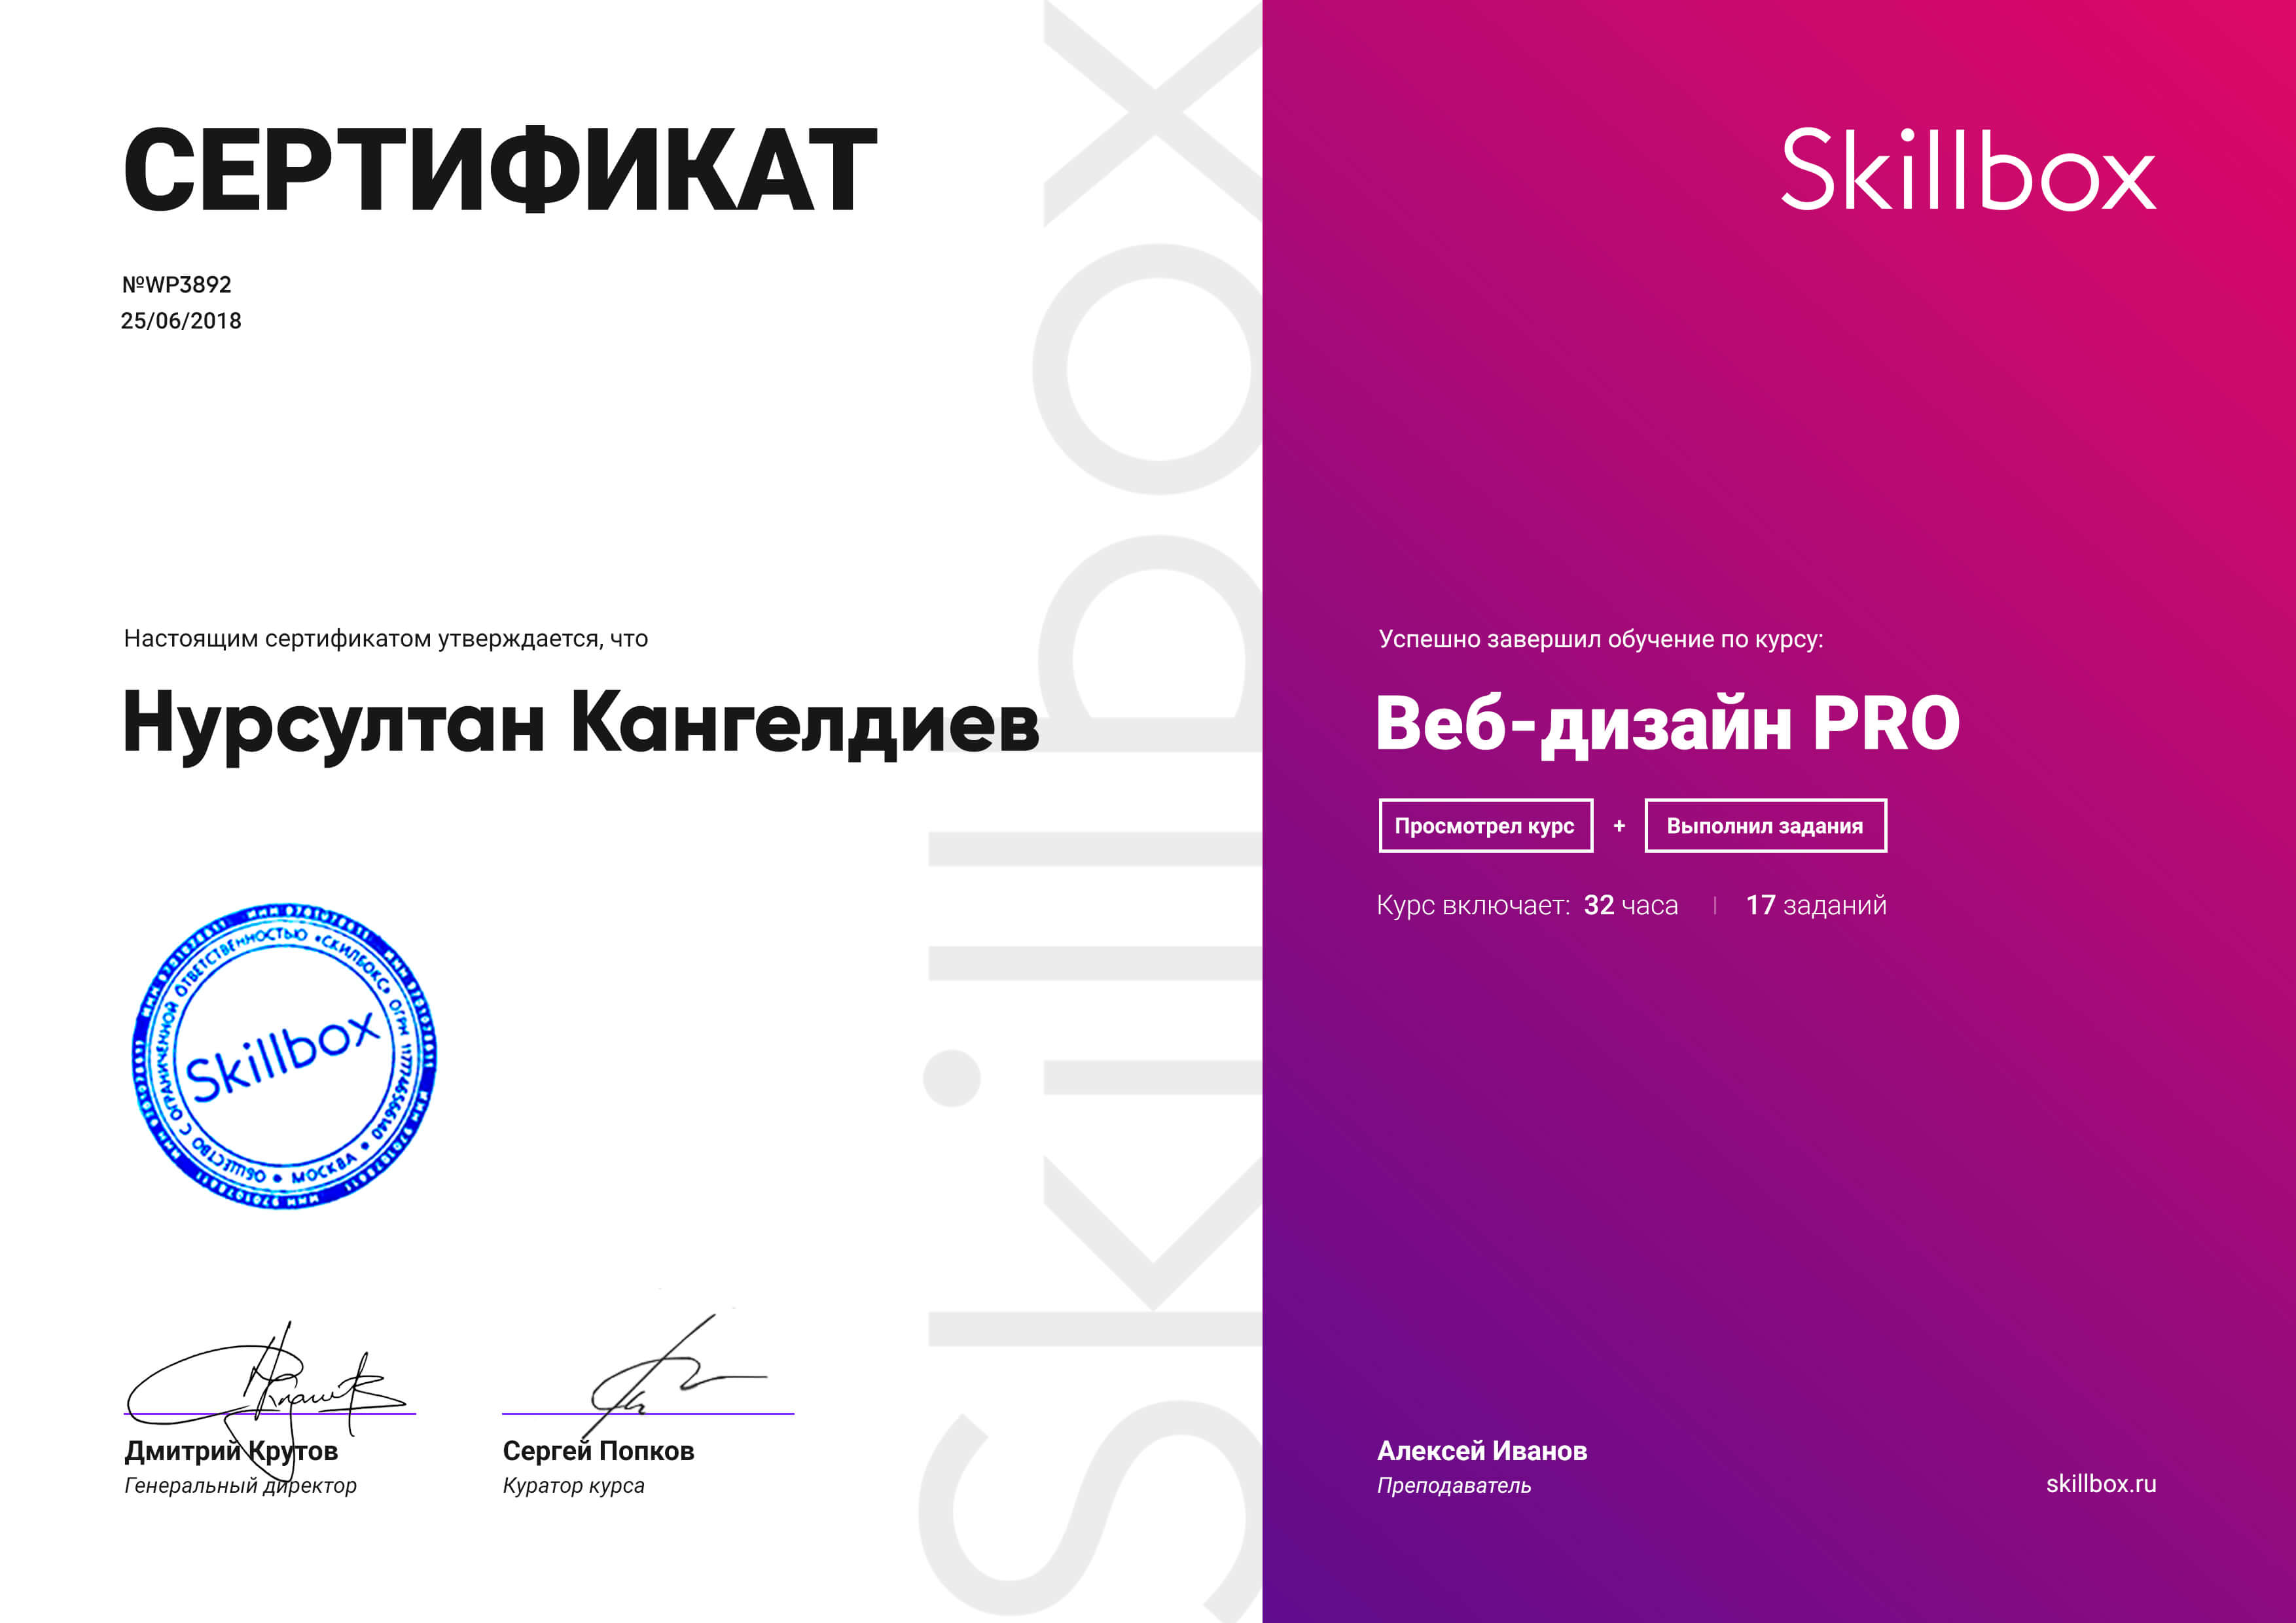 Сертификат “Веб-дизайн PRO”